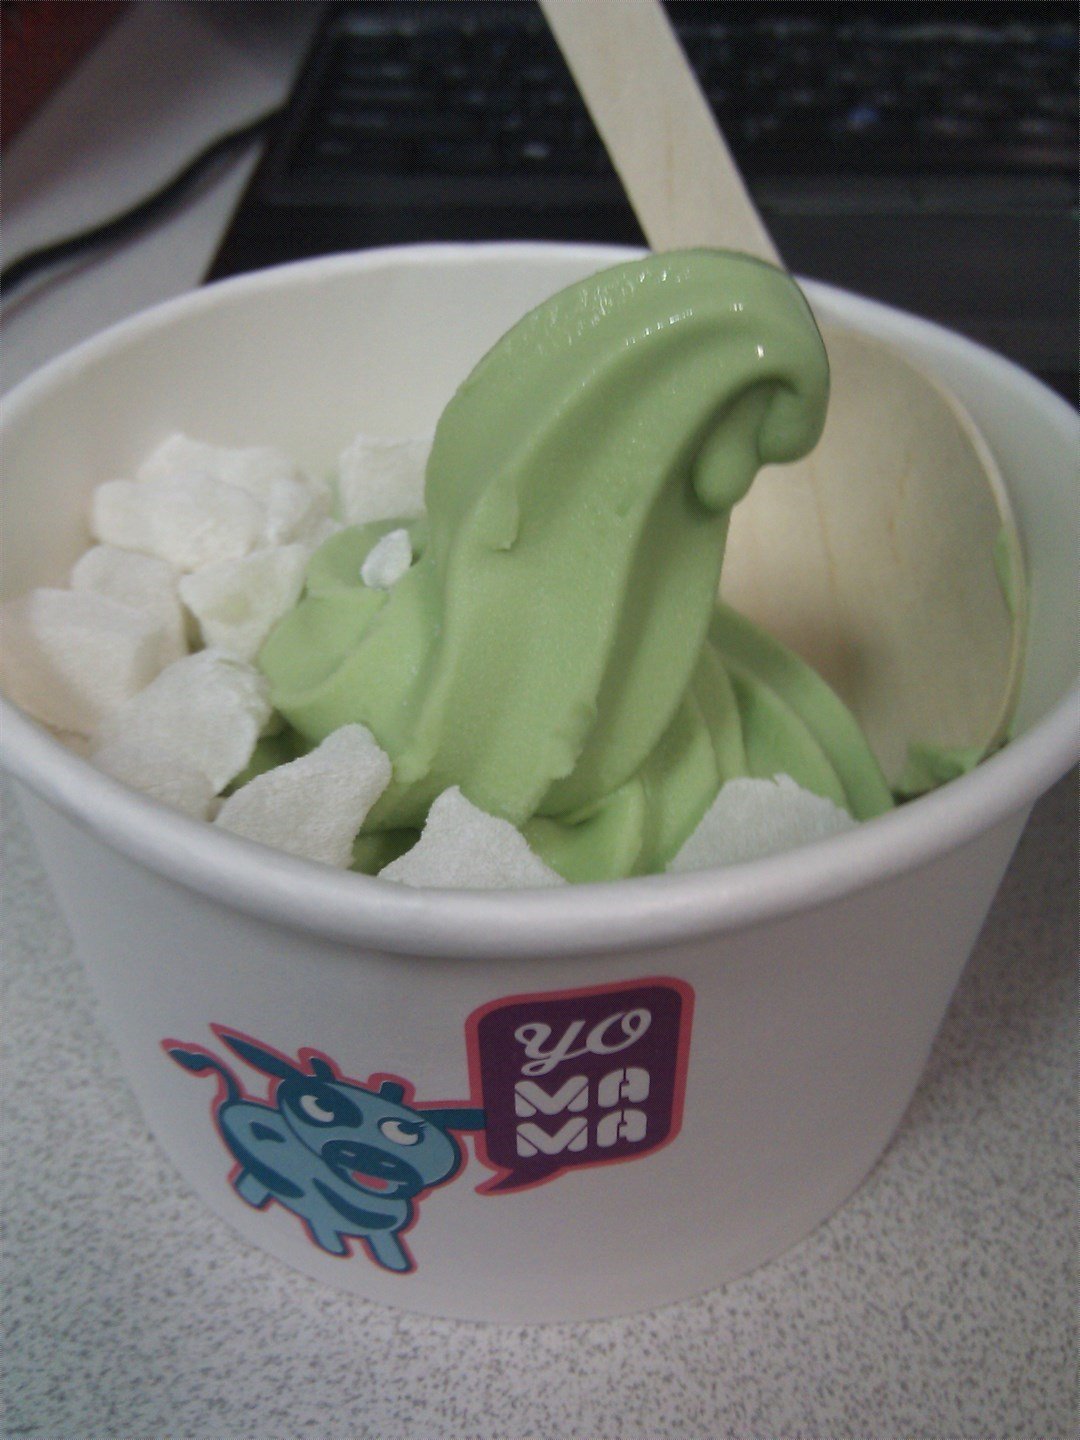 New green tea yogurt